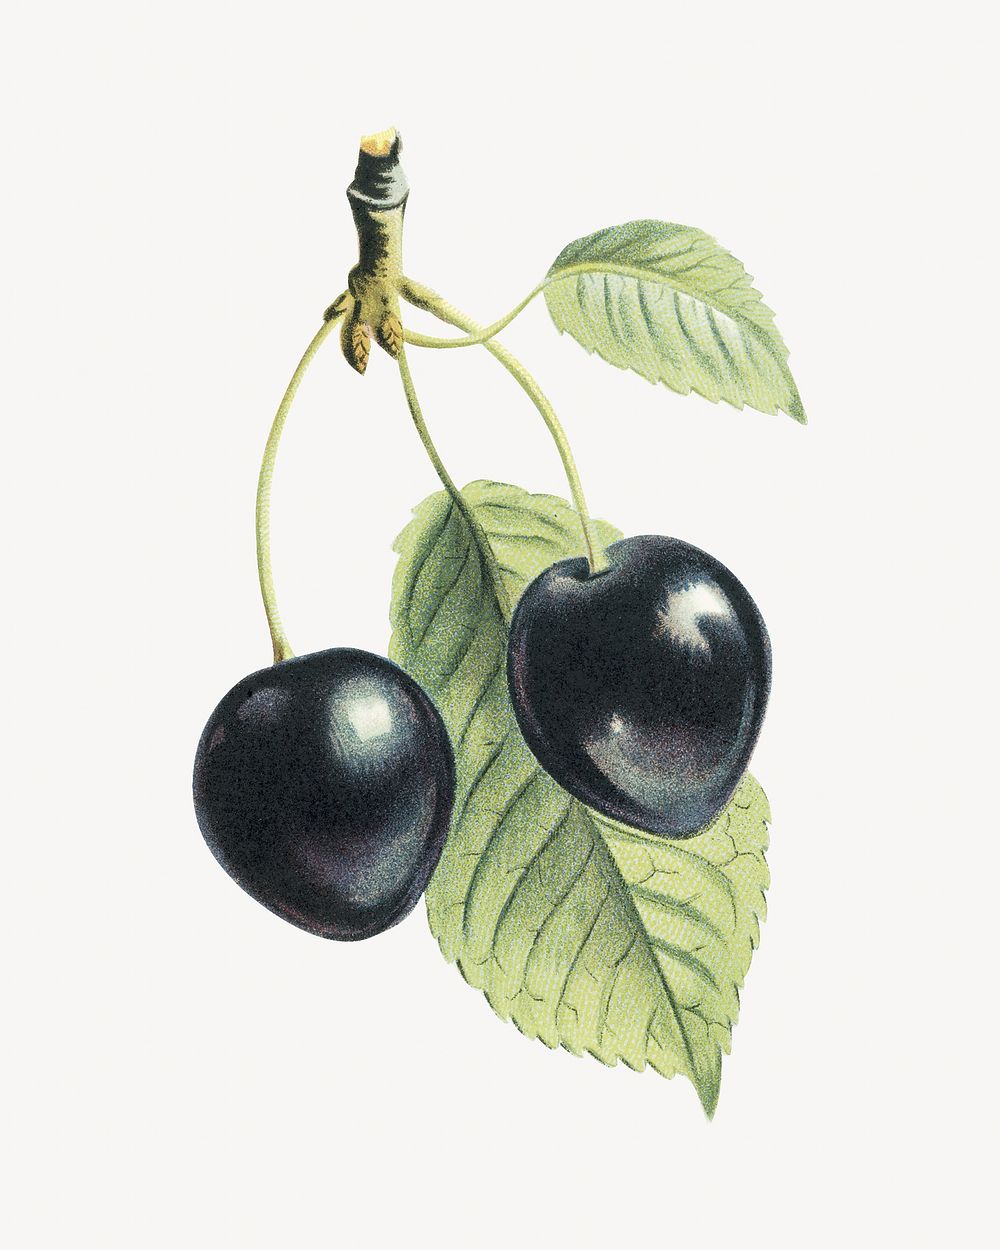 Vintage black cherry fruit illustration